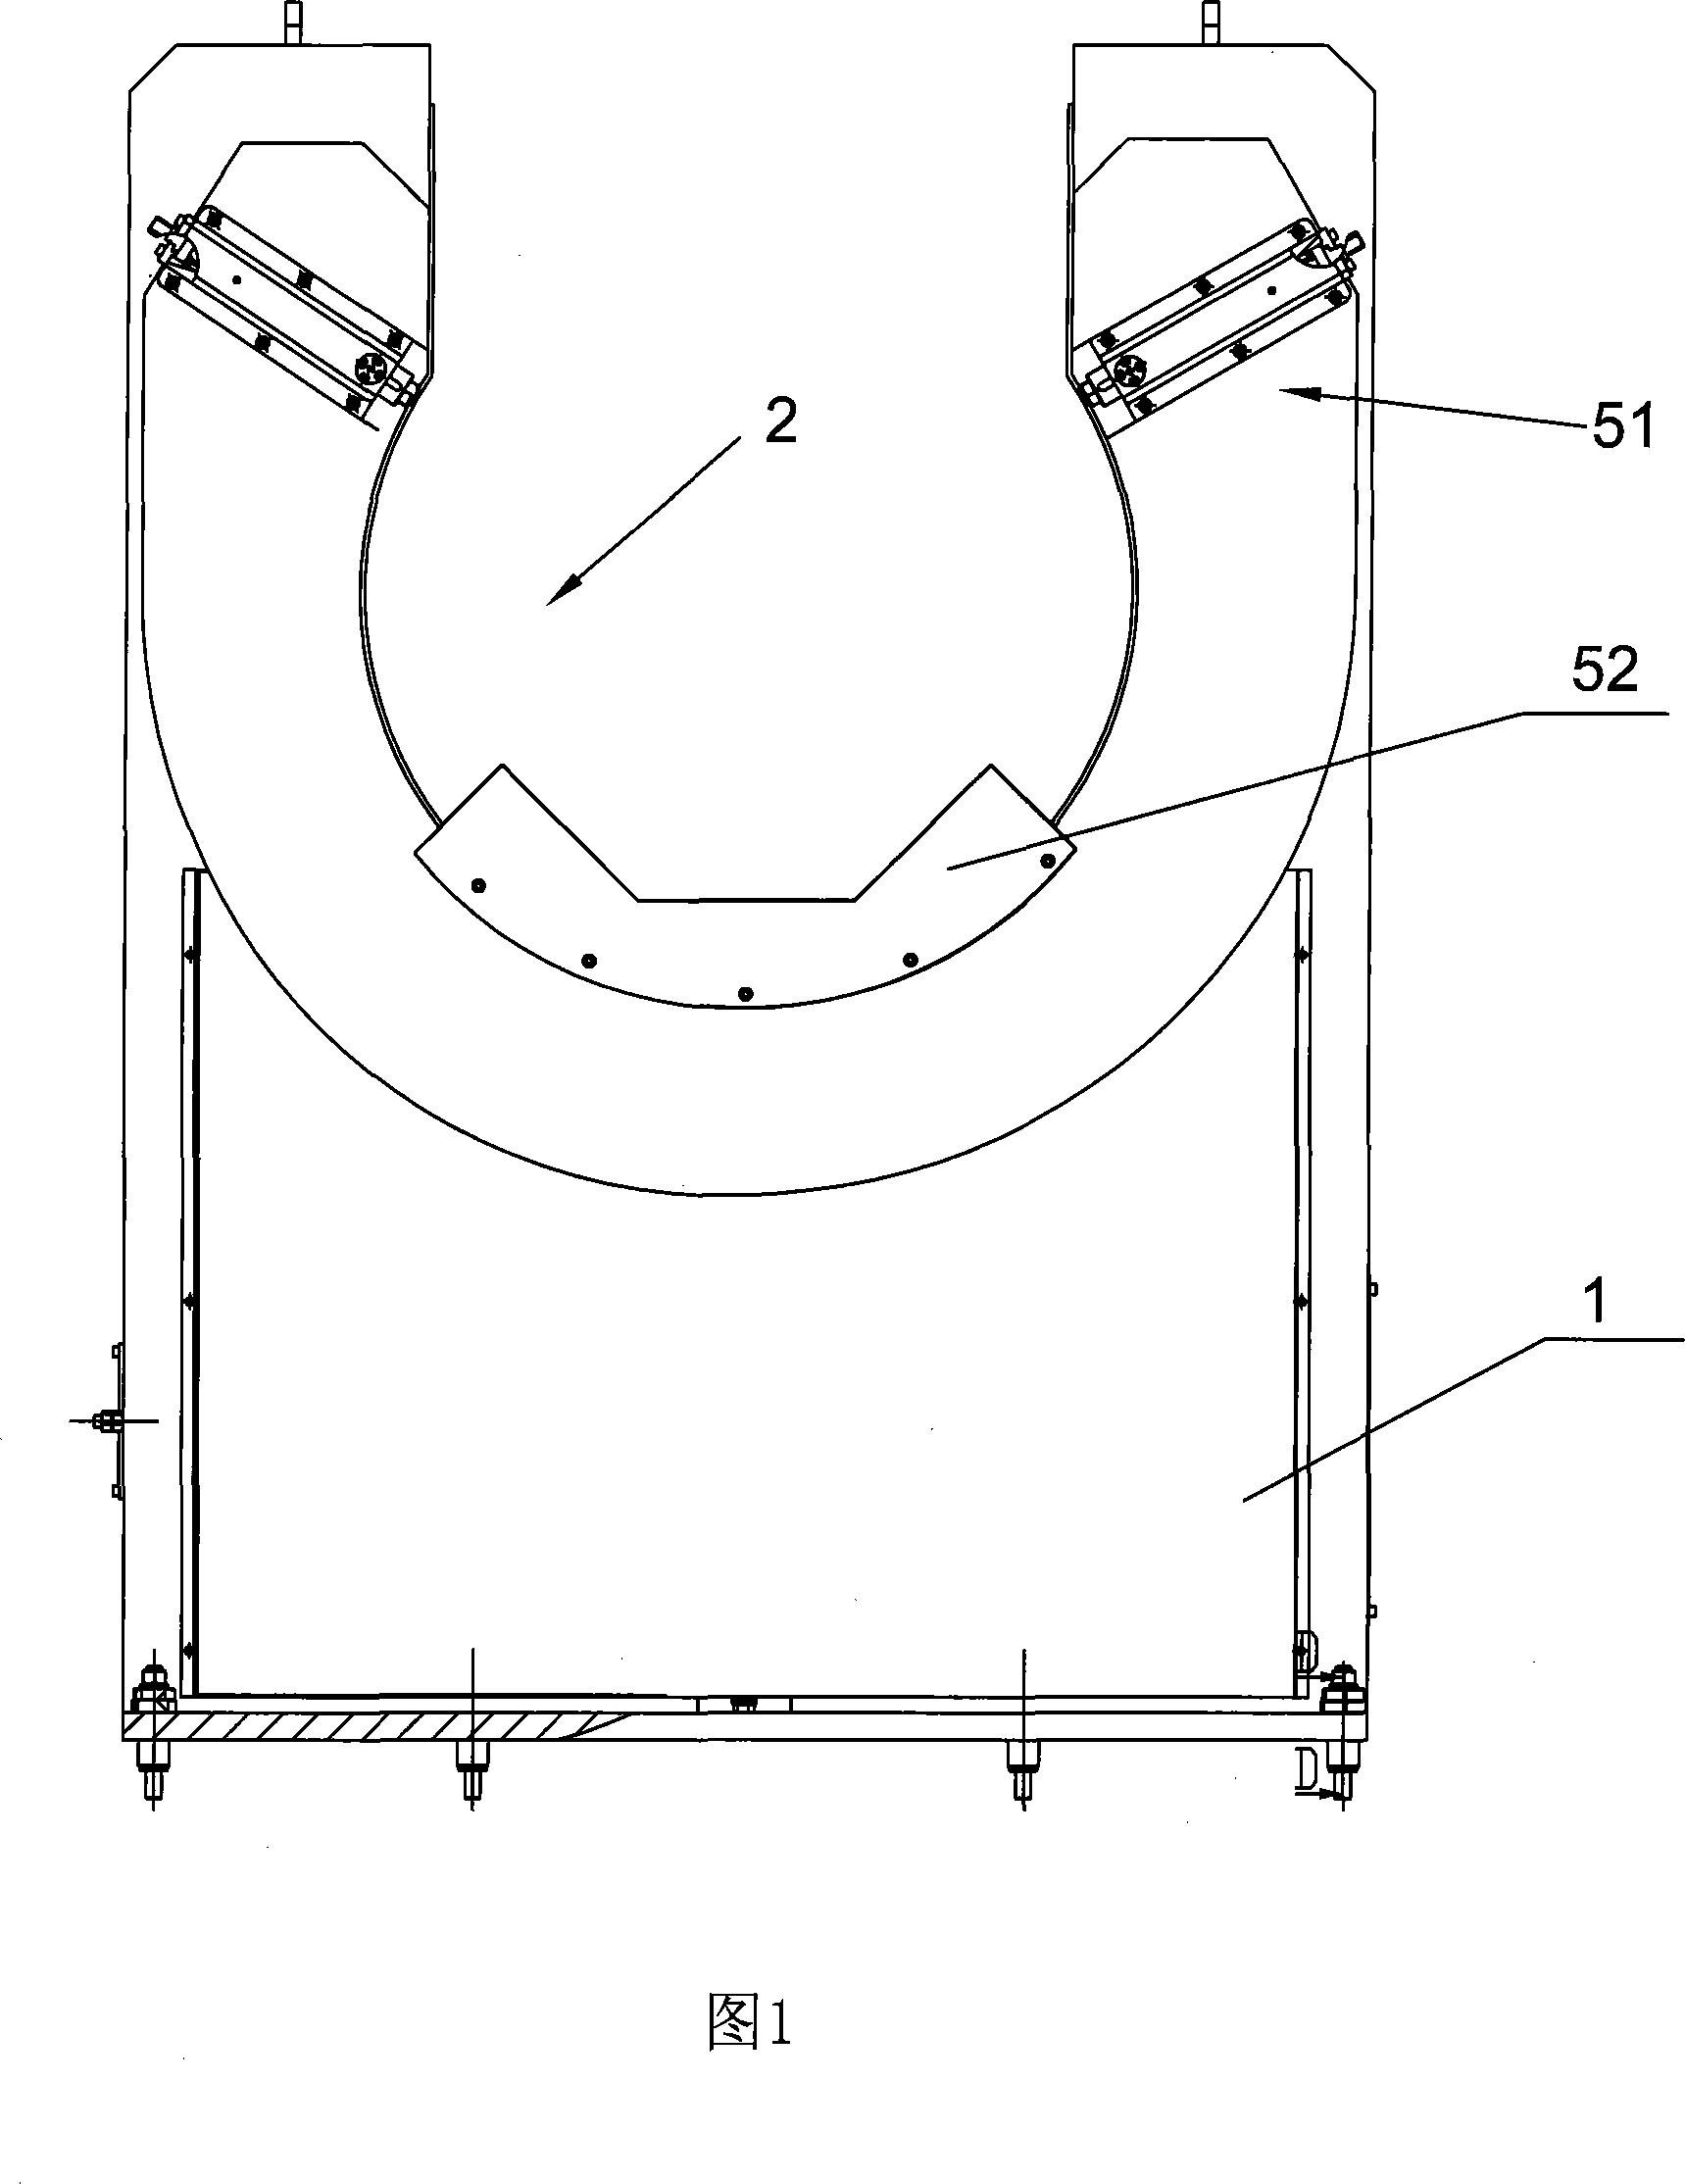 Large-sized fitting circular seam solder displacement machine